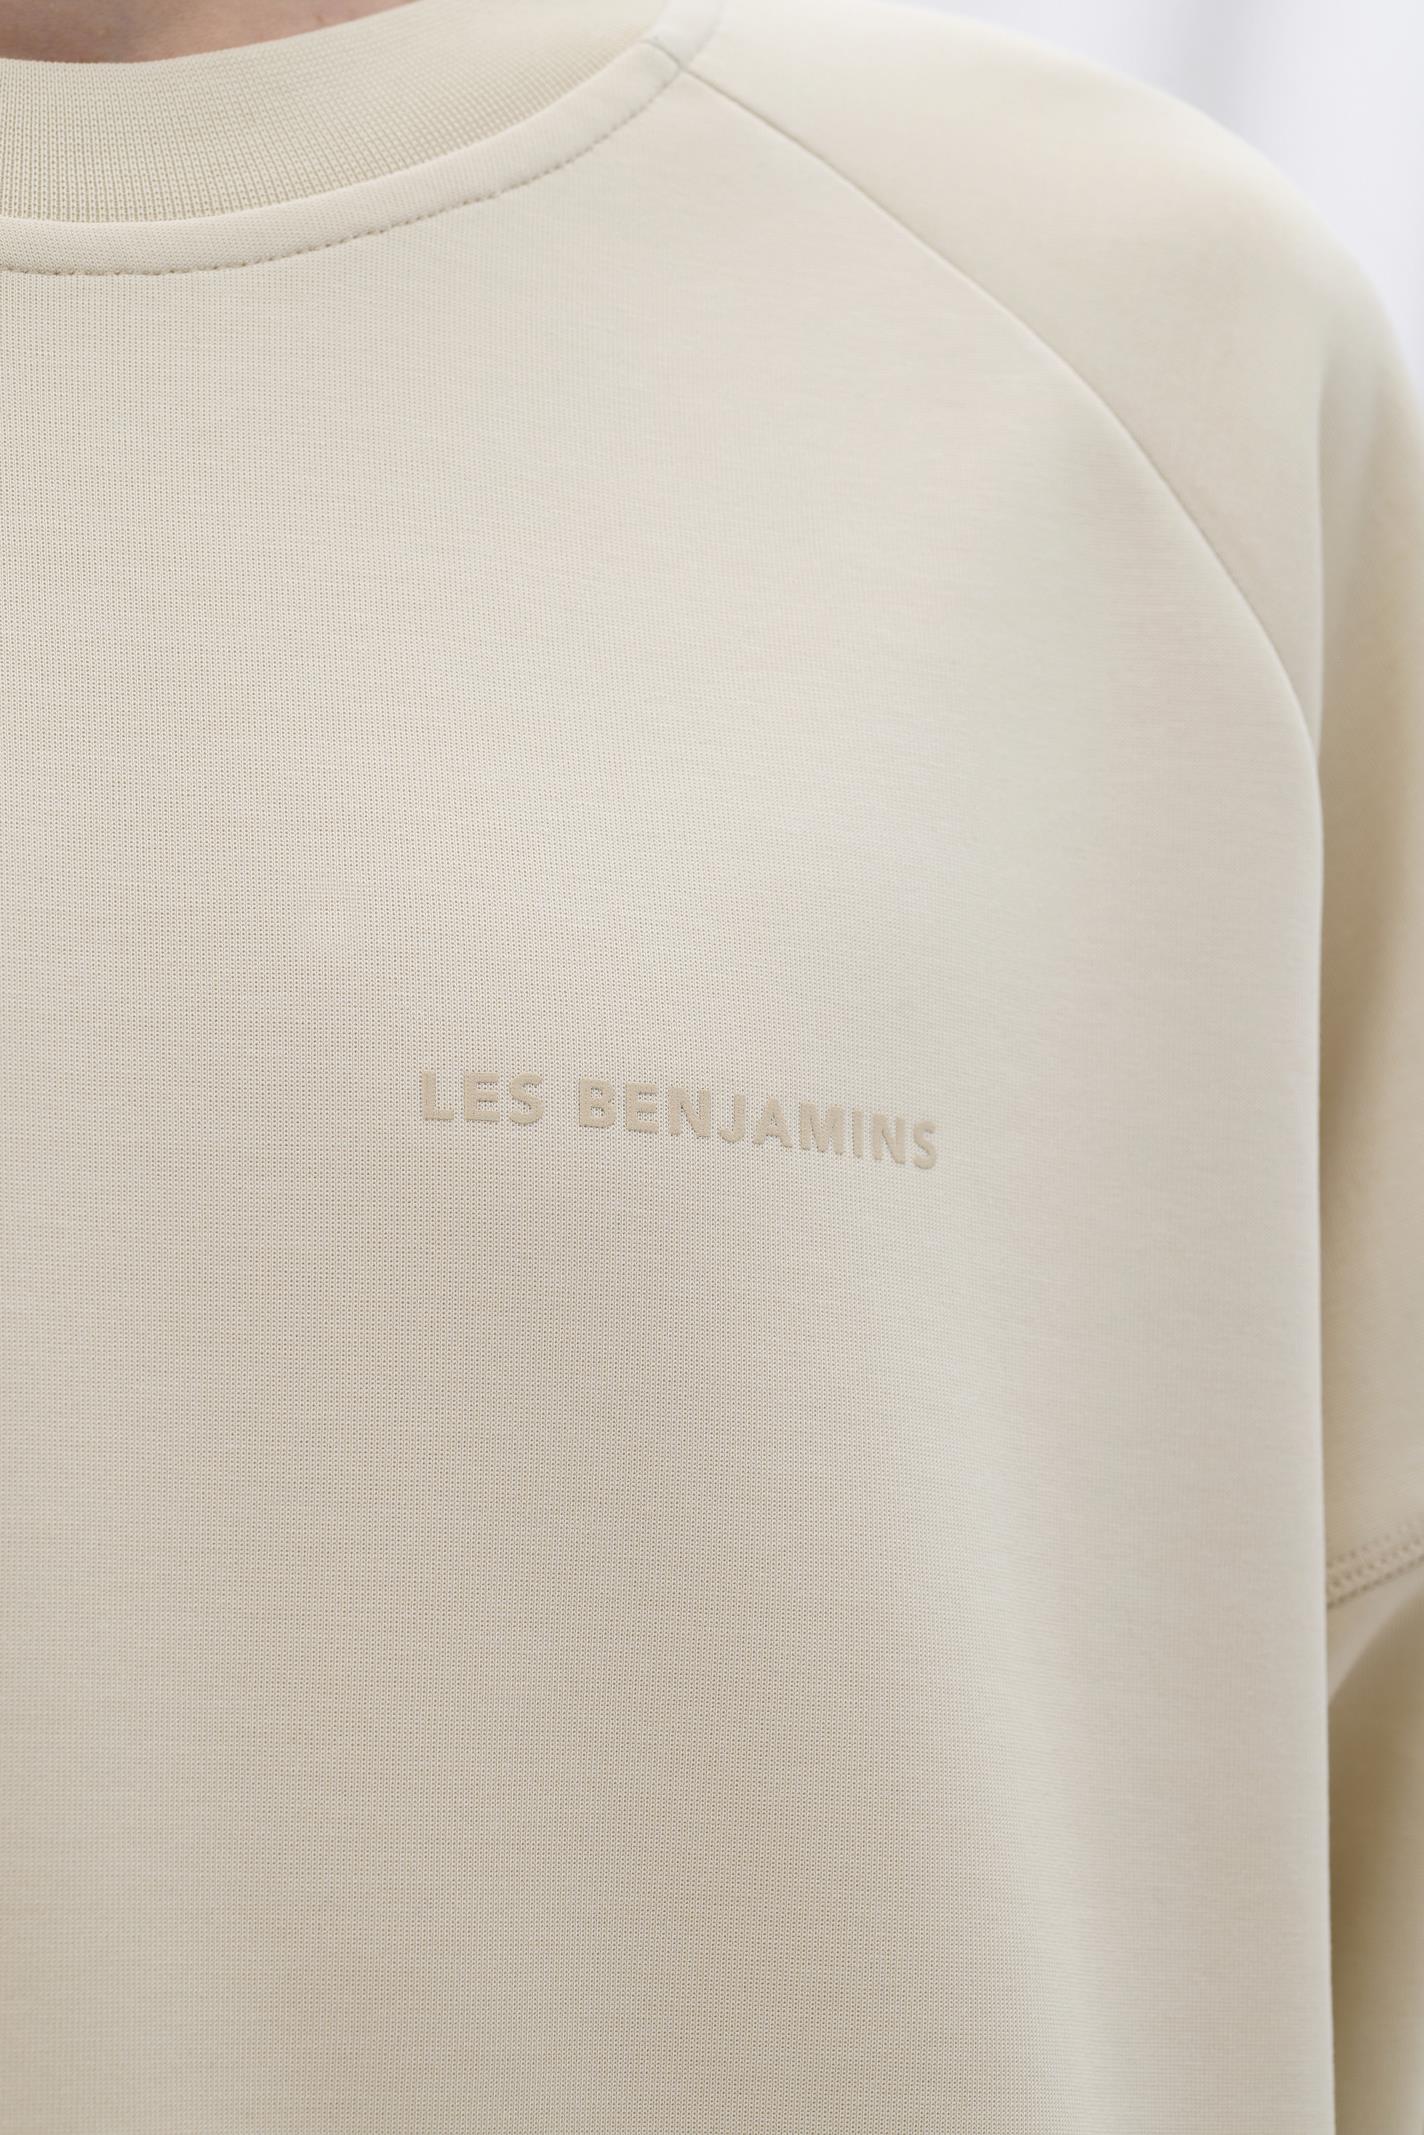 Les Benjamins Erkek Sweatshirt 408